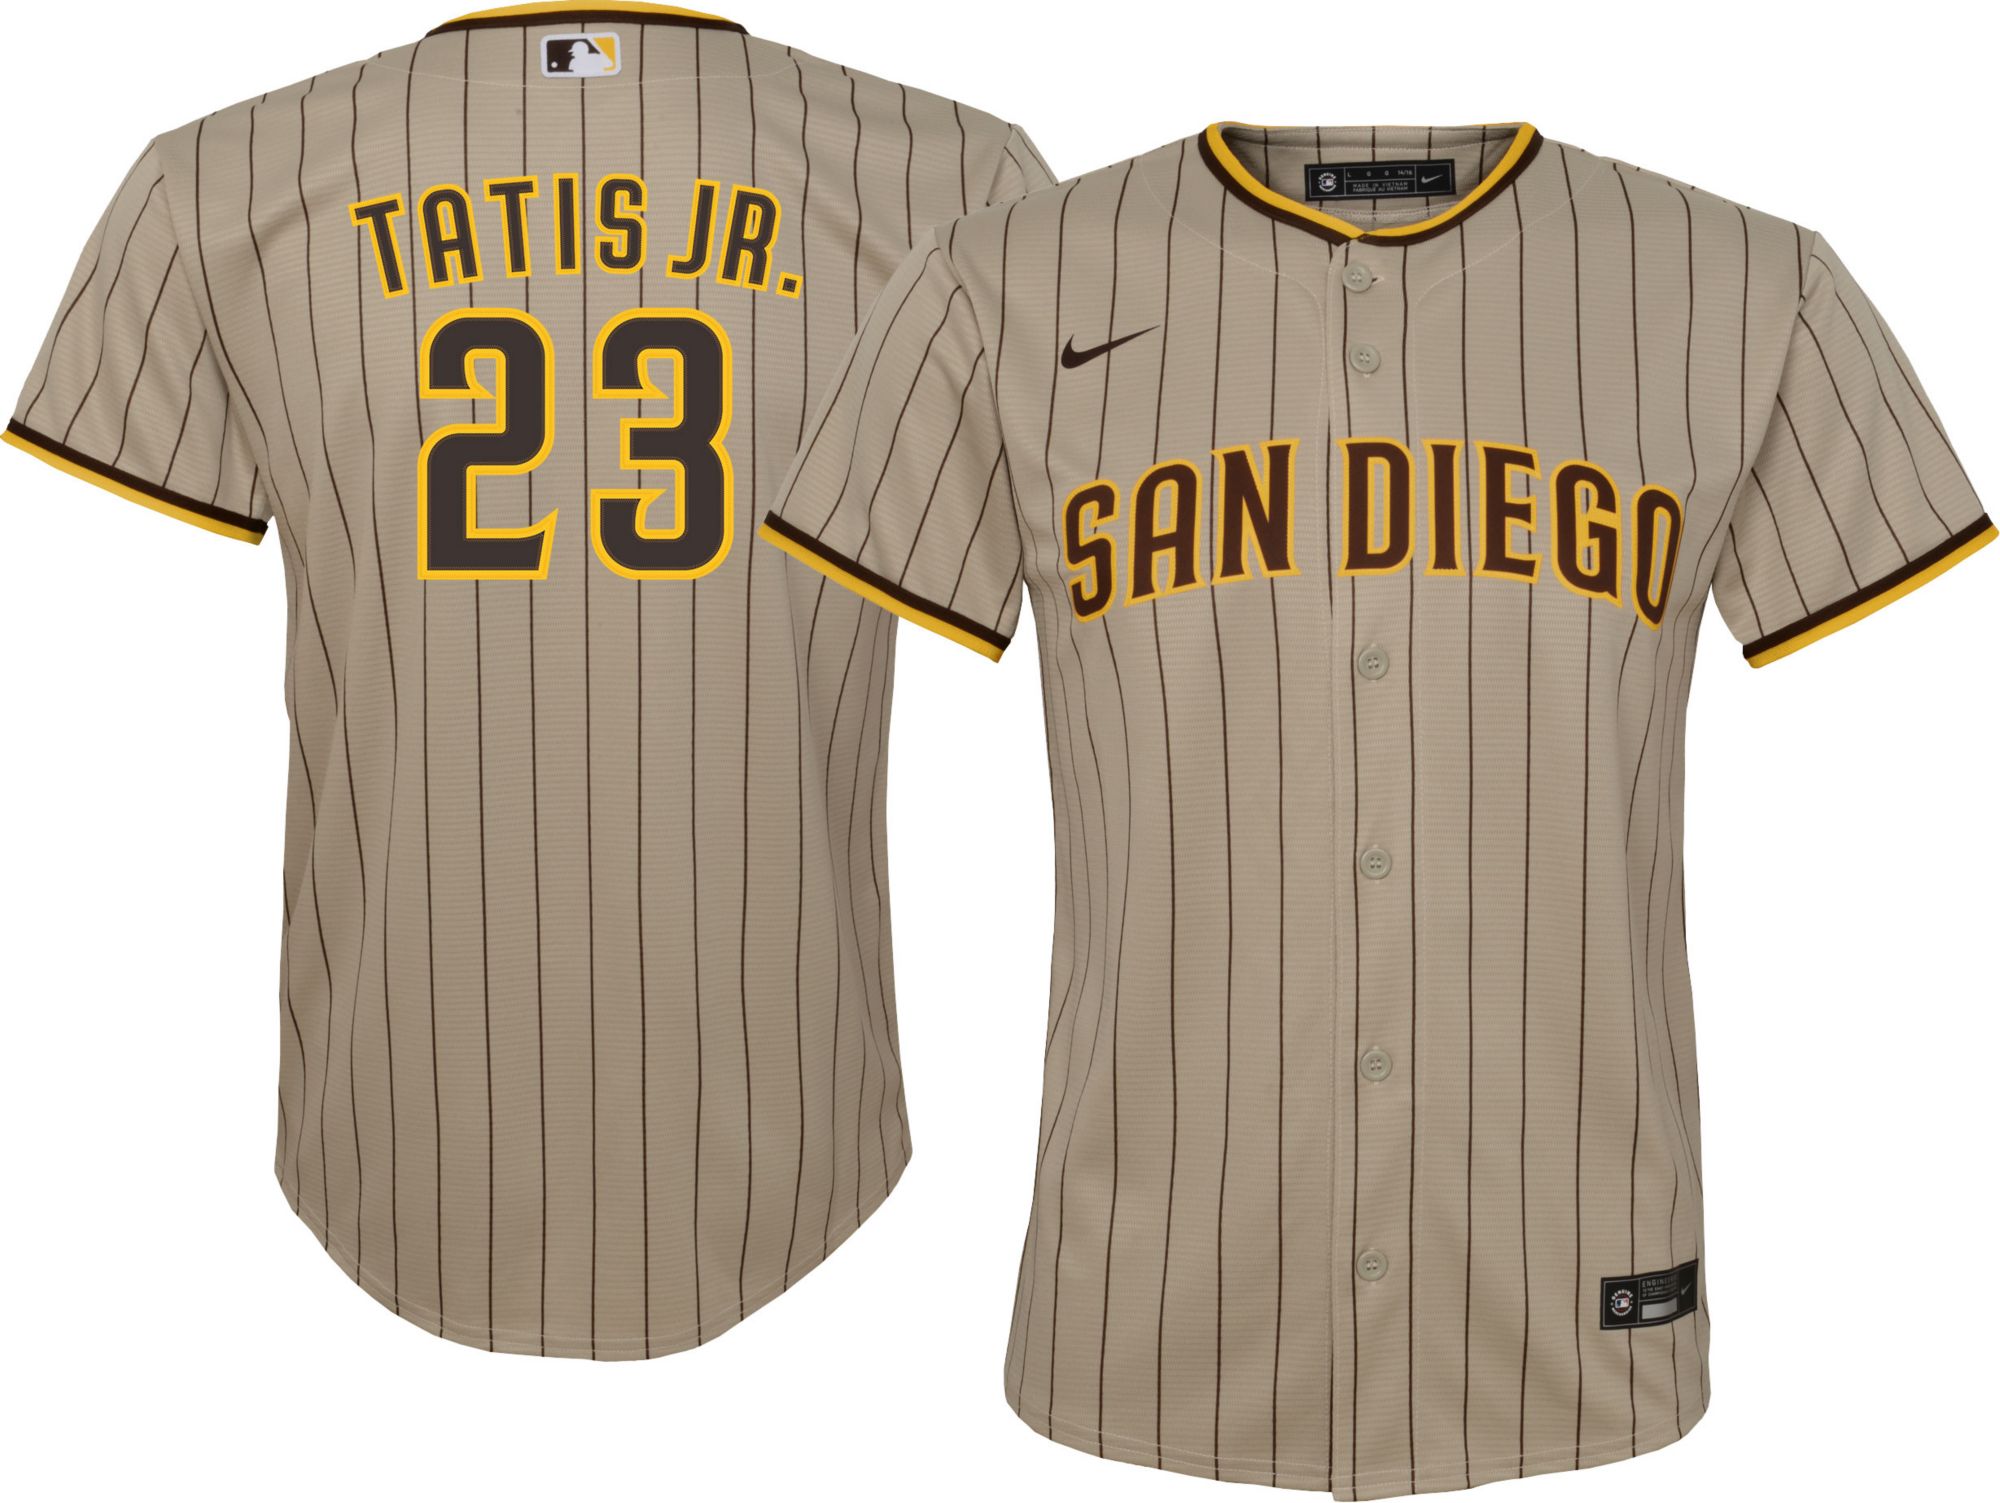 Nike Women's San Diego Padres Fernando Tatis Jr. #23 Brown T-Shirt